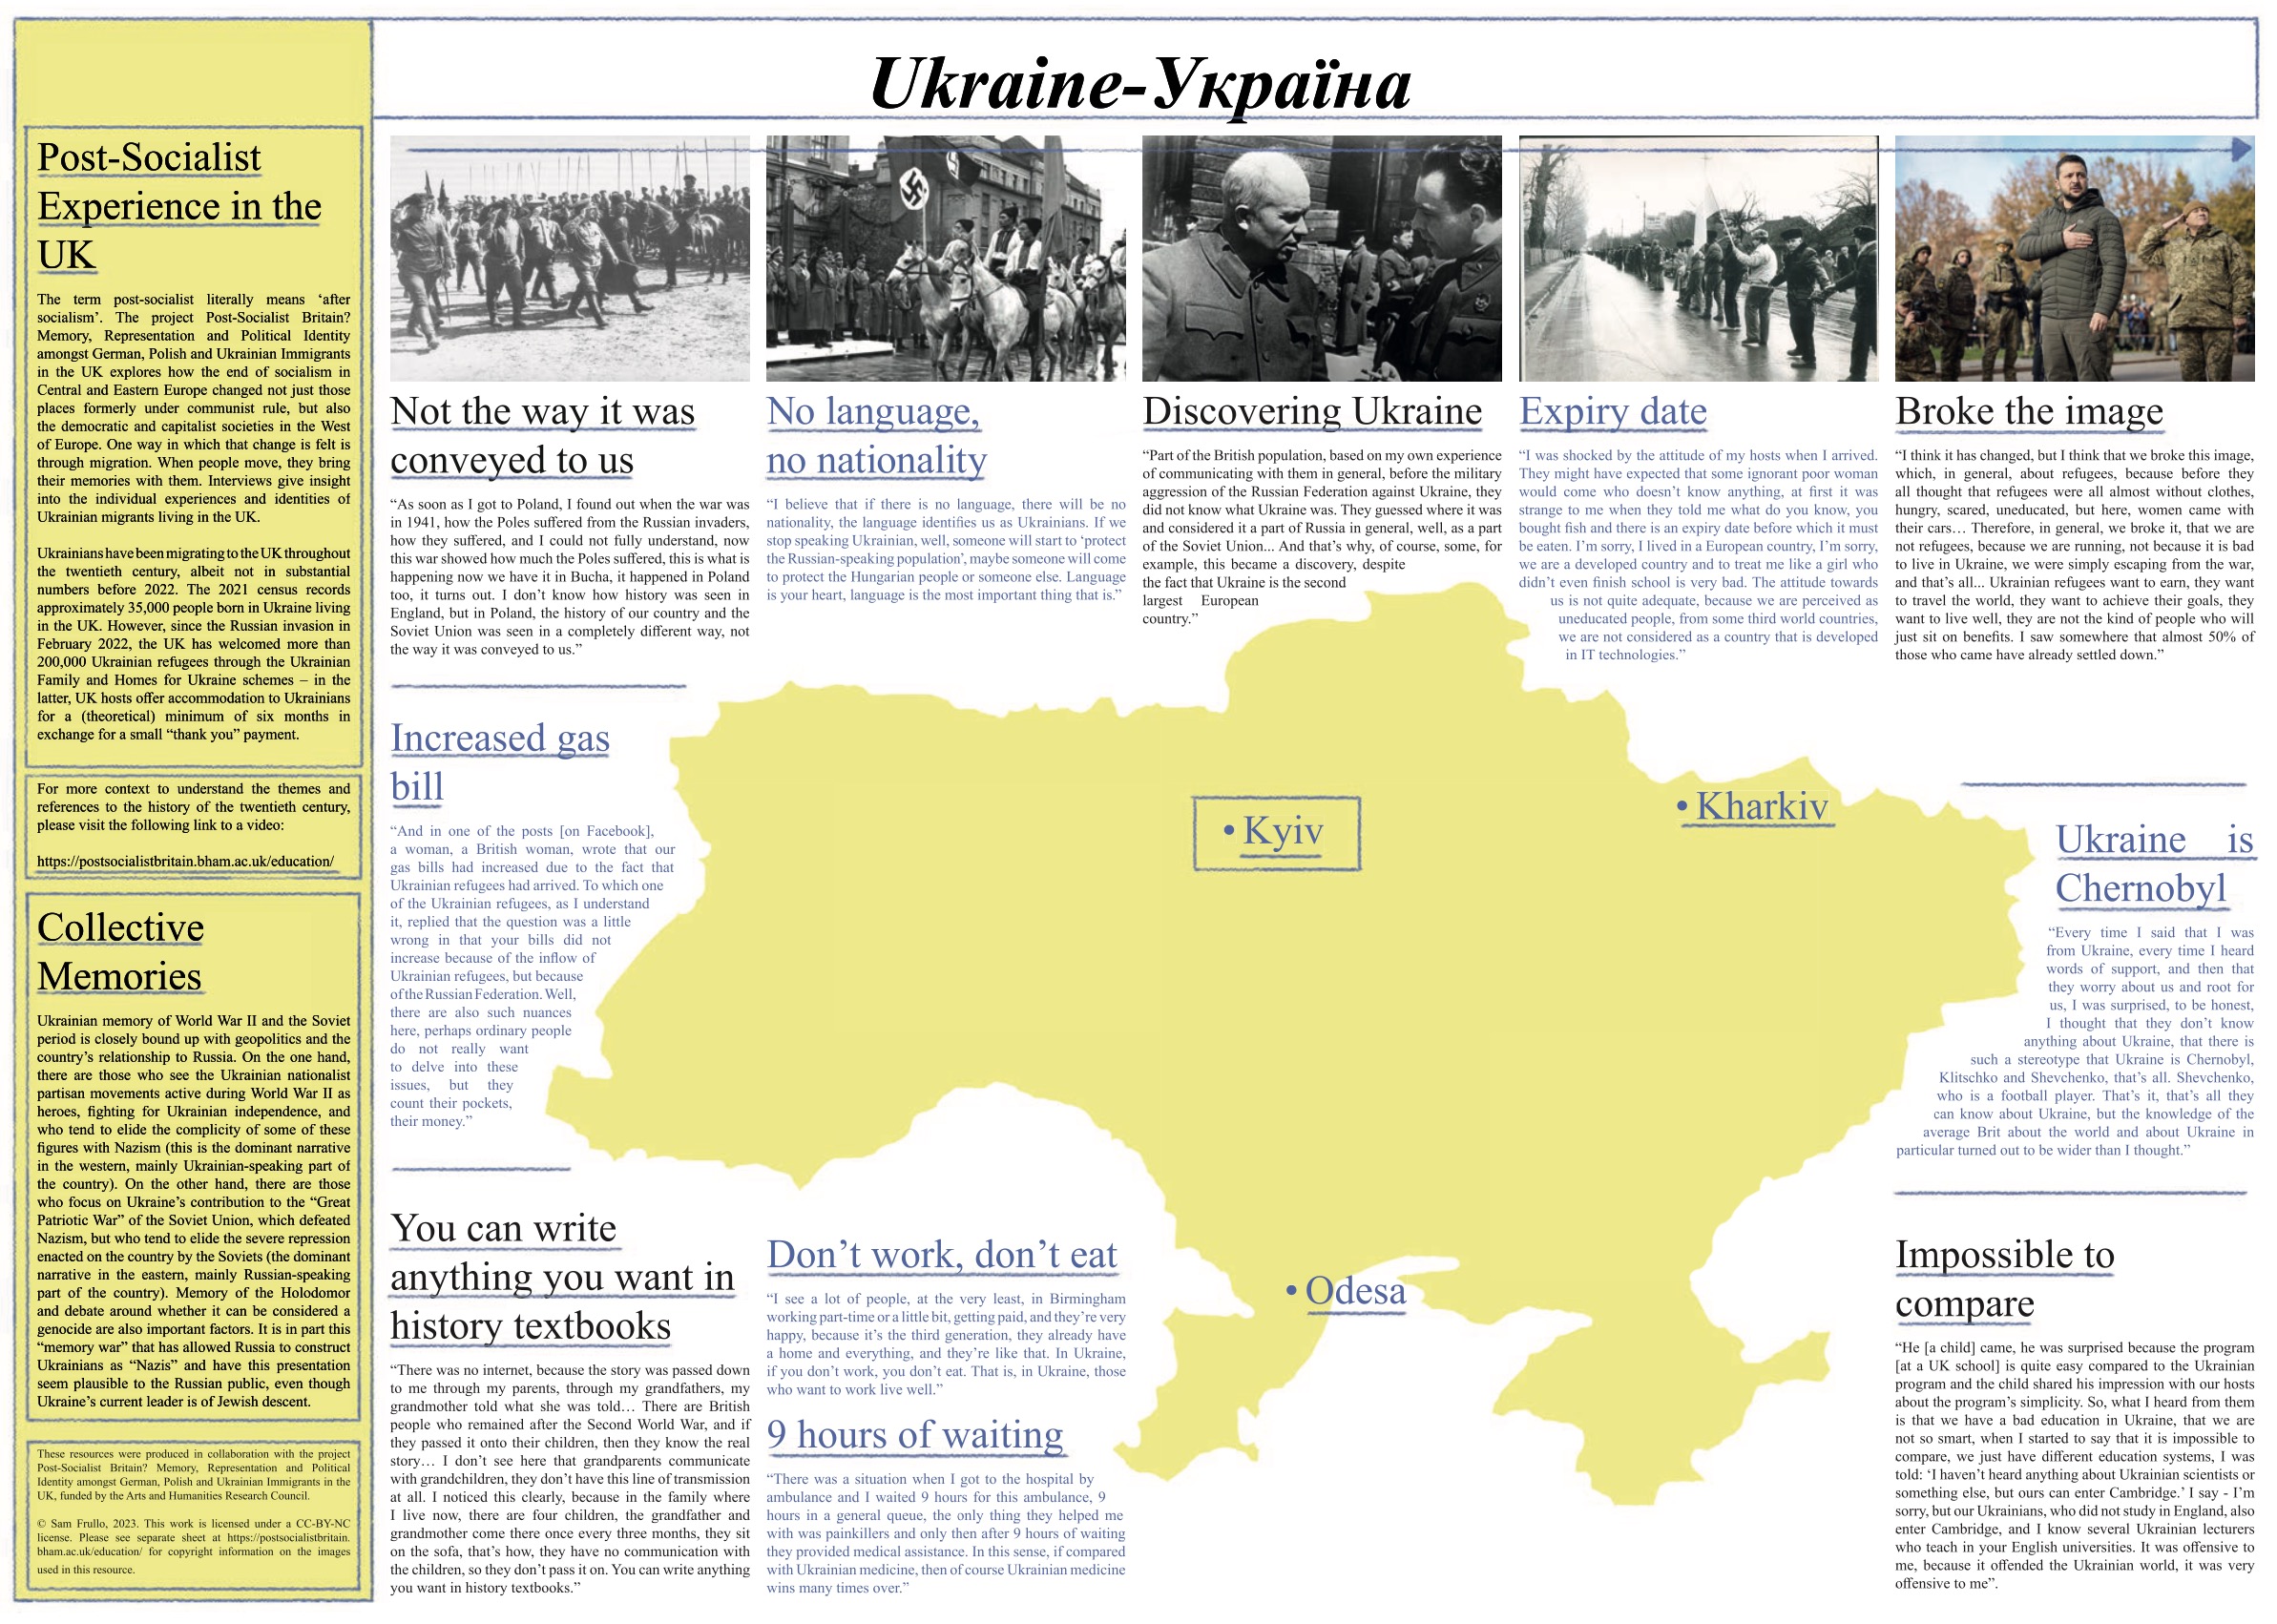 Post-Socialist Experiences: Ukraine